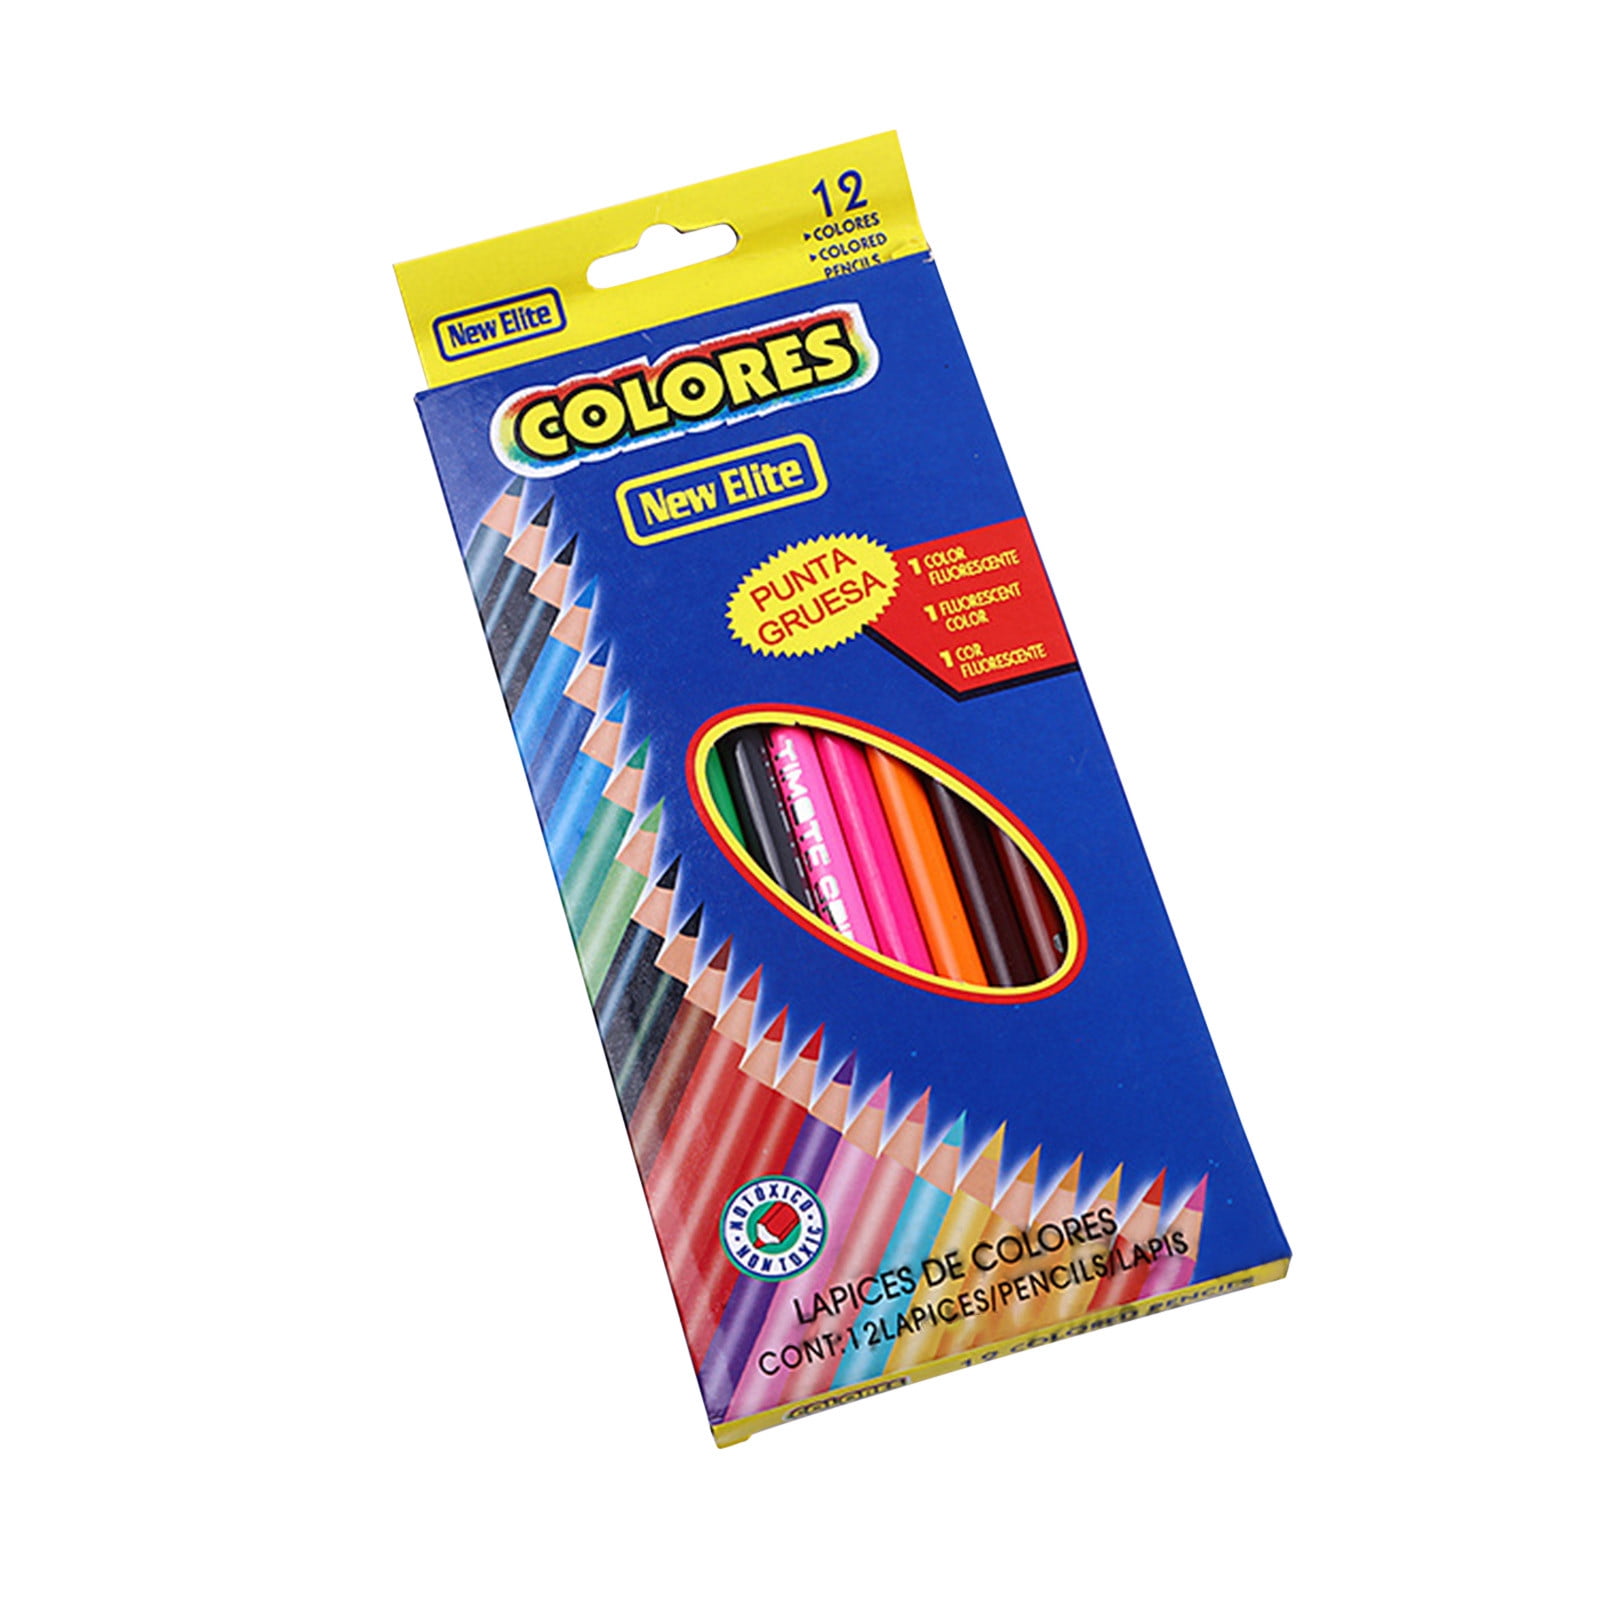 nsxsu 12 Colors Rainbow Pencils, Jumbo Colored Pencils for Adults